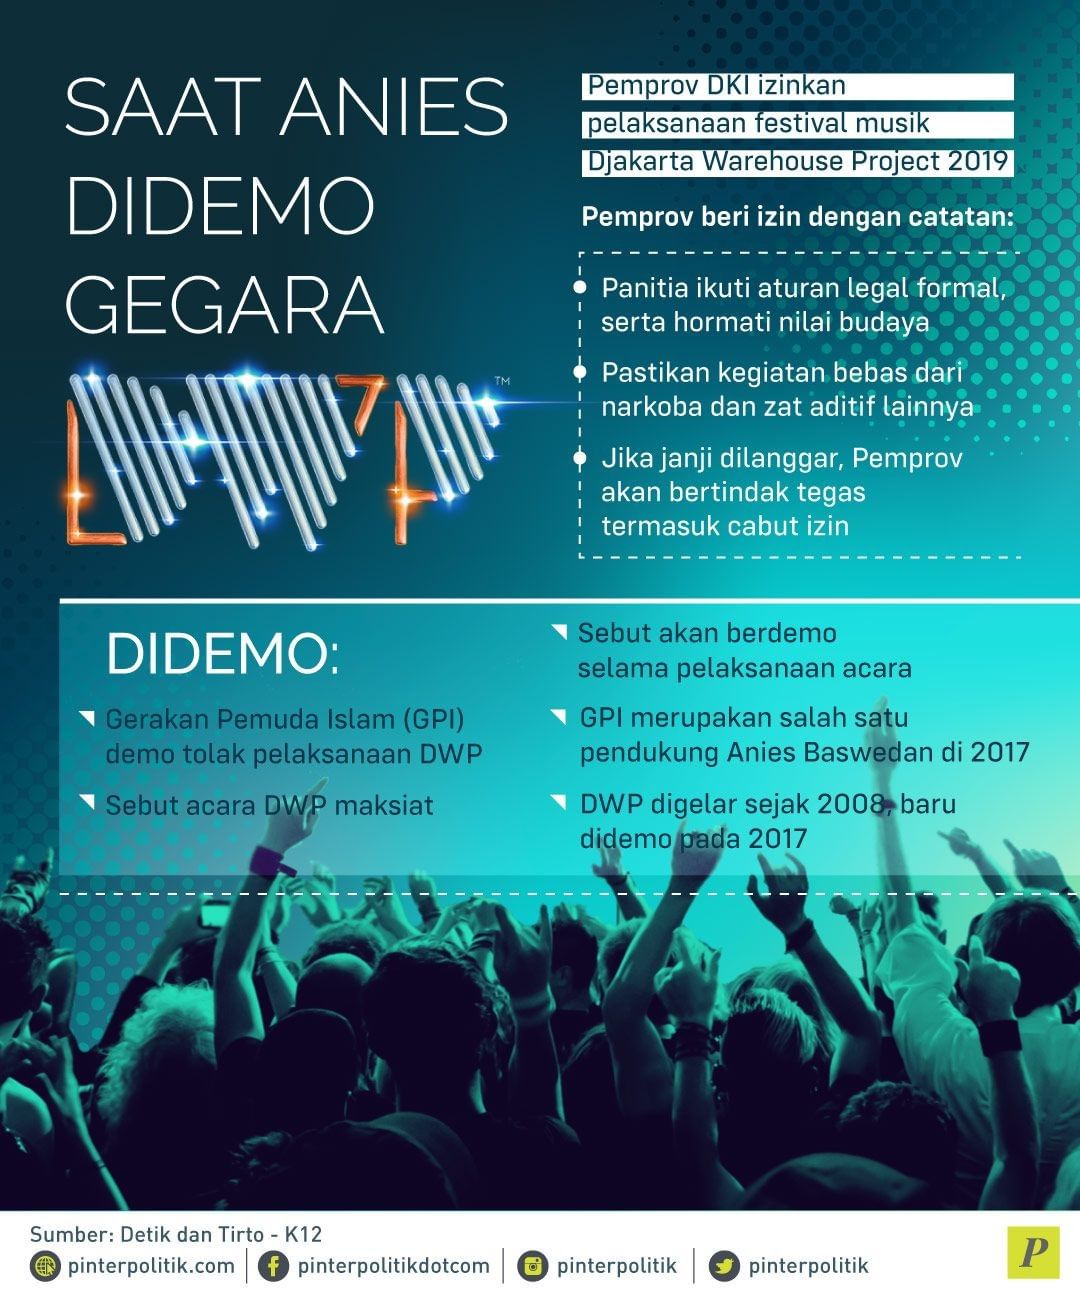 Pemprov DKI izinkan festival musik Djakarta Warehouse Project 2019 (DWP)